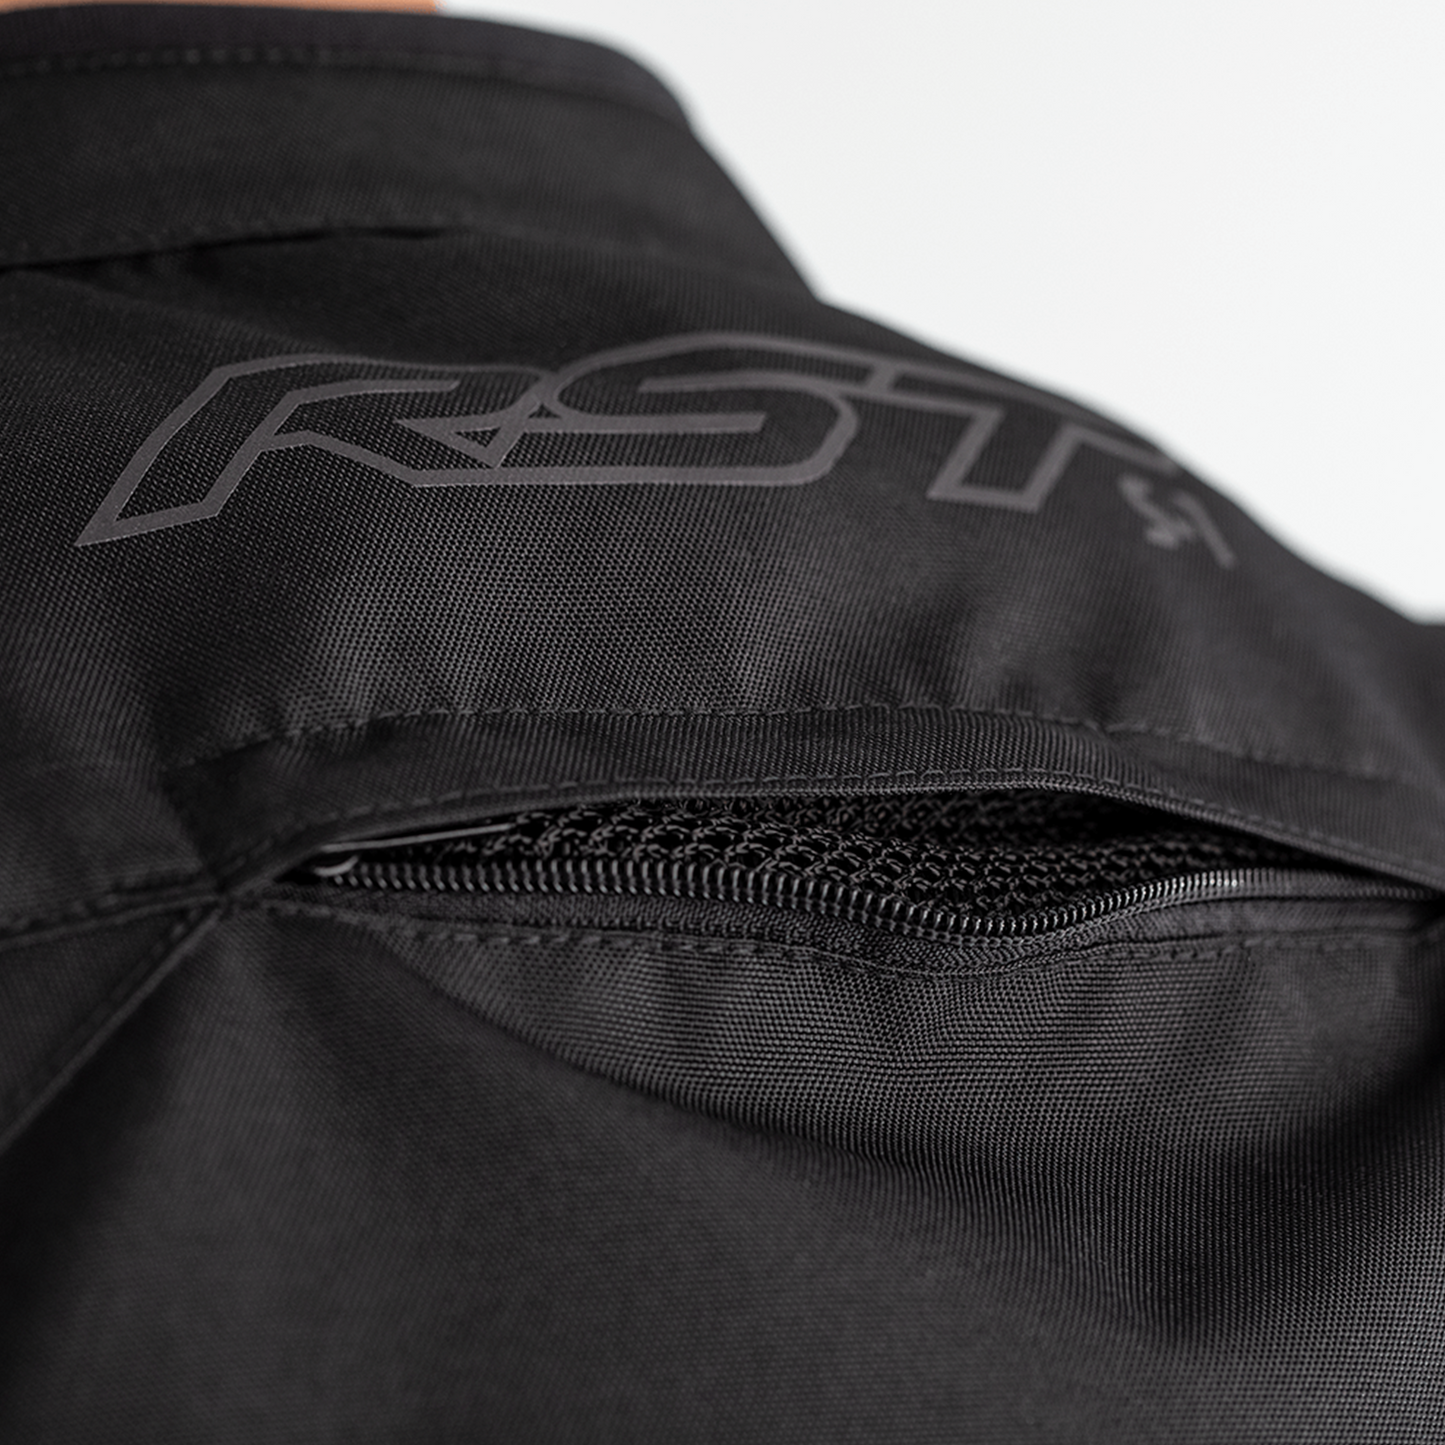 RST S1 (CE) Textile Jacket - Black (2559)